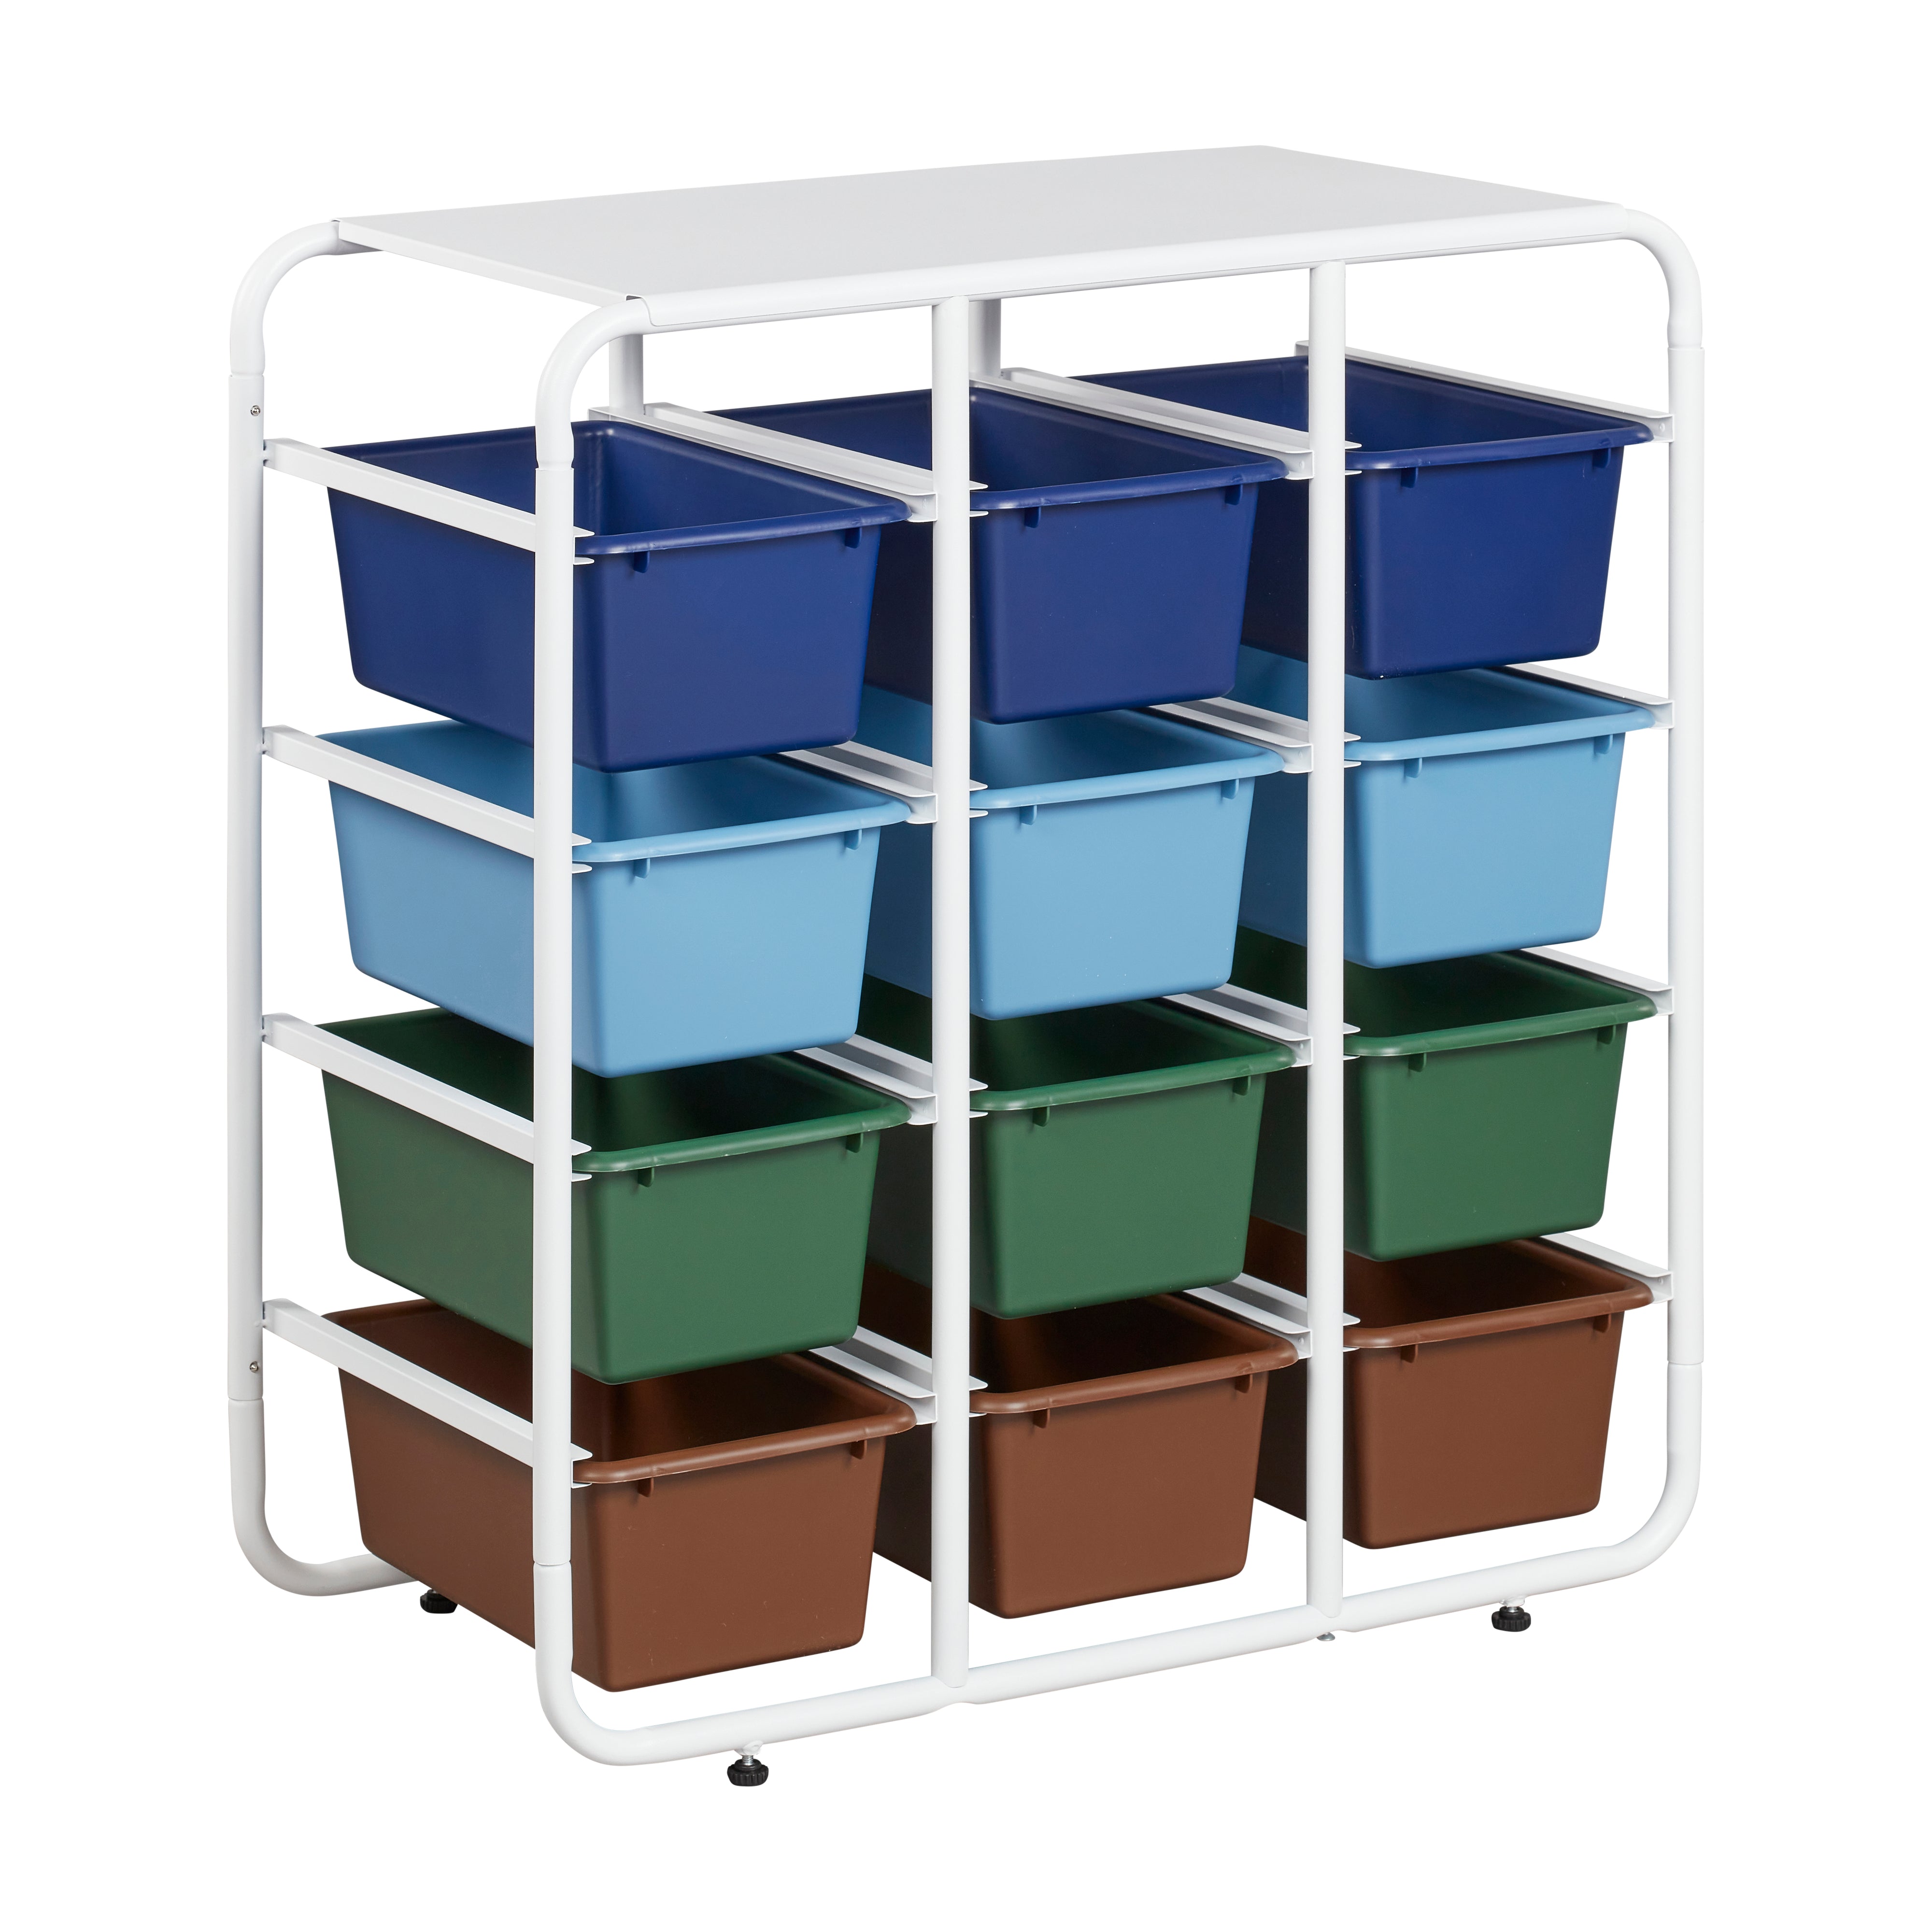 4-Tier Storage Rack with 12 Cubby Bins 4x3, Multipurpose Organization